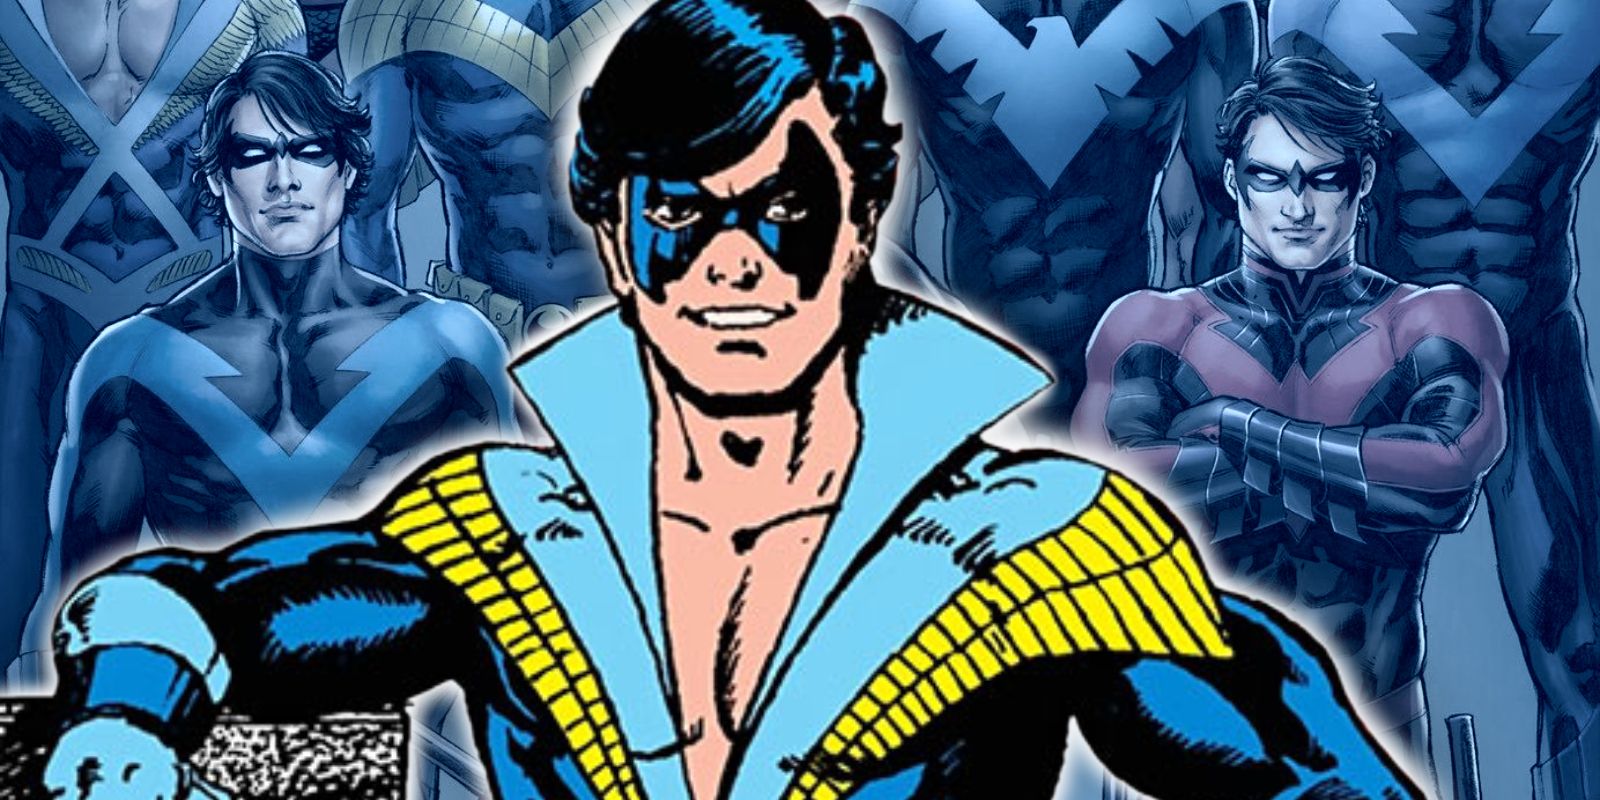 Nightwing has a goofy classic costume.